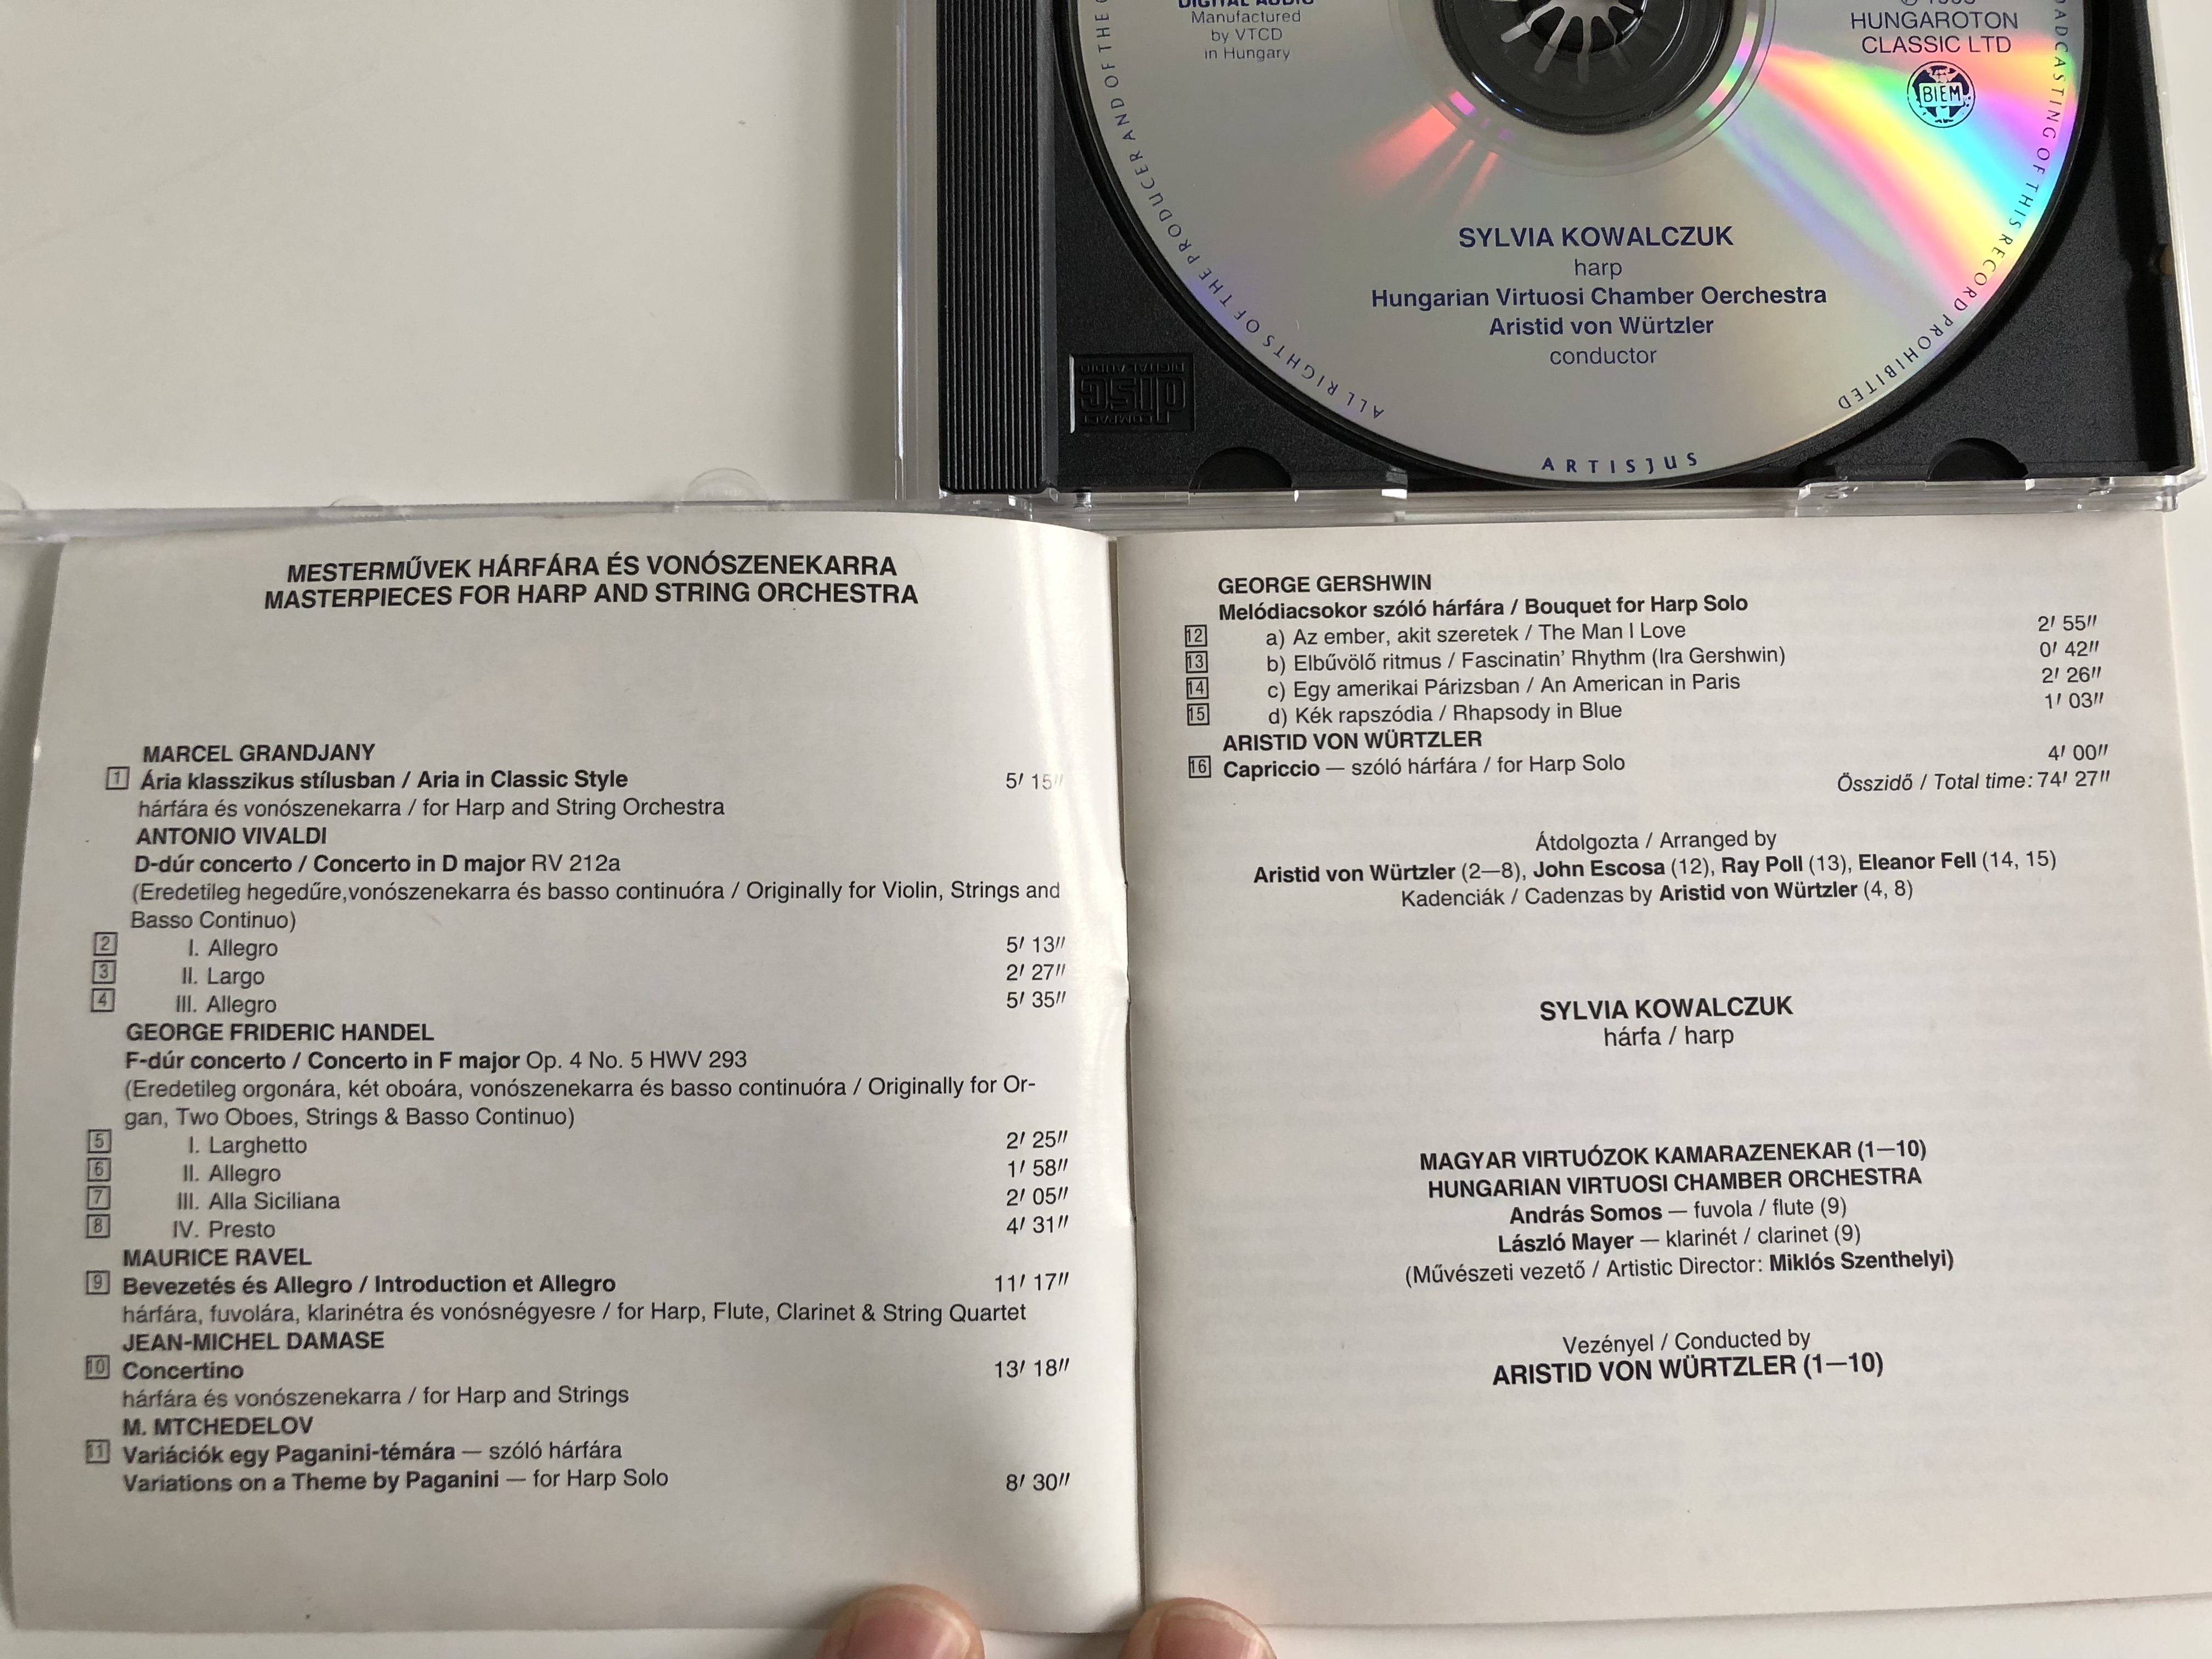 masterpieces-for-harp-and-orchestra-vivaldi-handel-ravel-gershwin-sylvia-kowalszuk-hungarian-virtuosi-aristid-von-wurtzler-hungaroton-audio-cd-31550-stereo-hcd-31550-3-.jpg